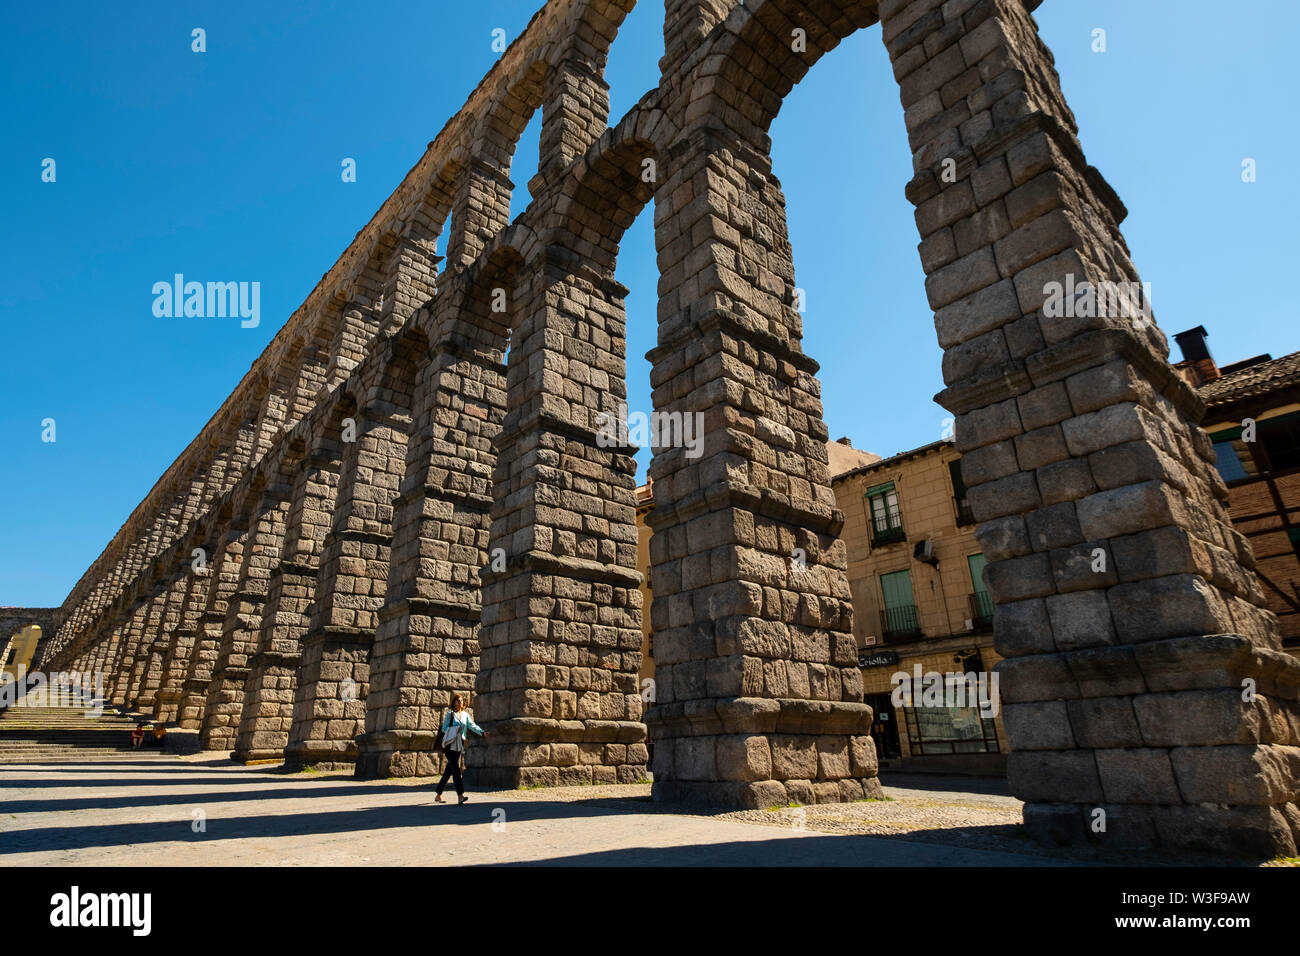 Ancient roman aqueduct, UNESCO World Heritage Site. Segovia city. Castilla León, Spain Europe Stock Photo